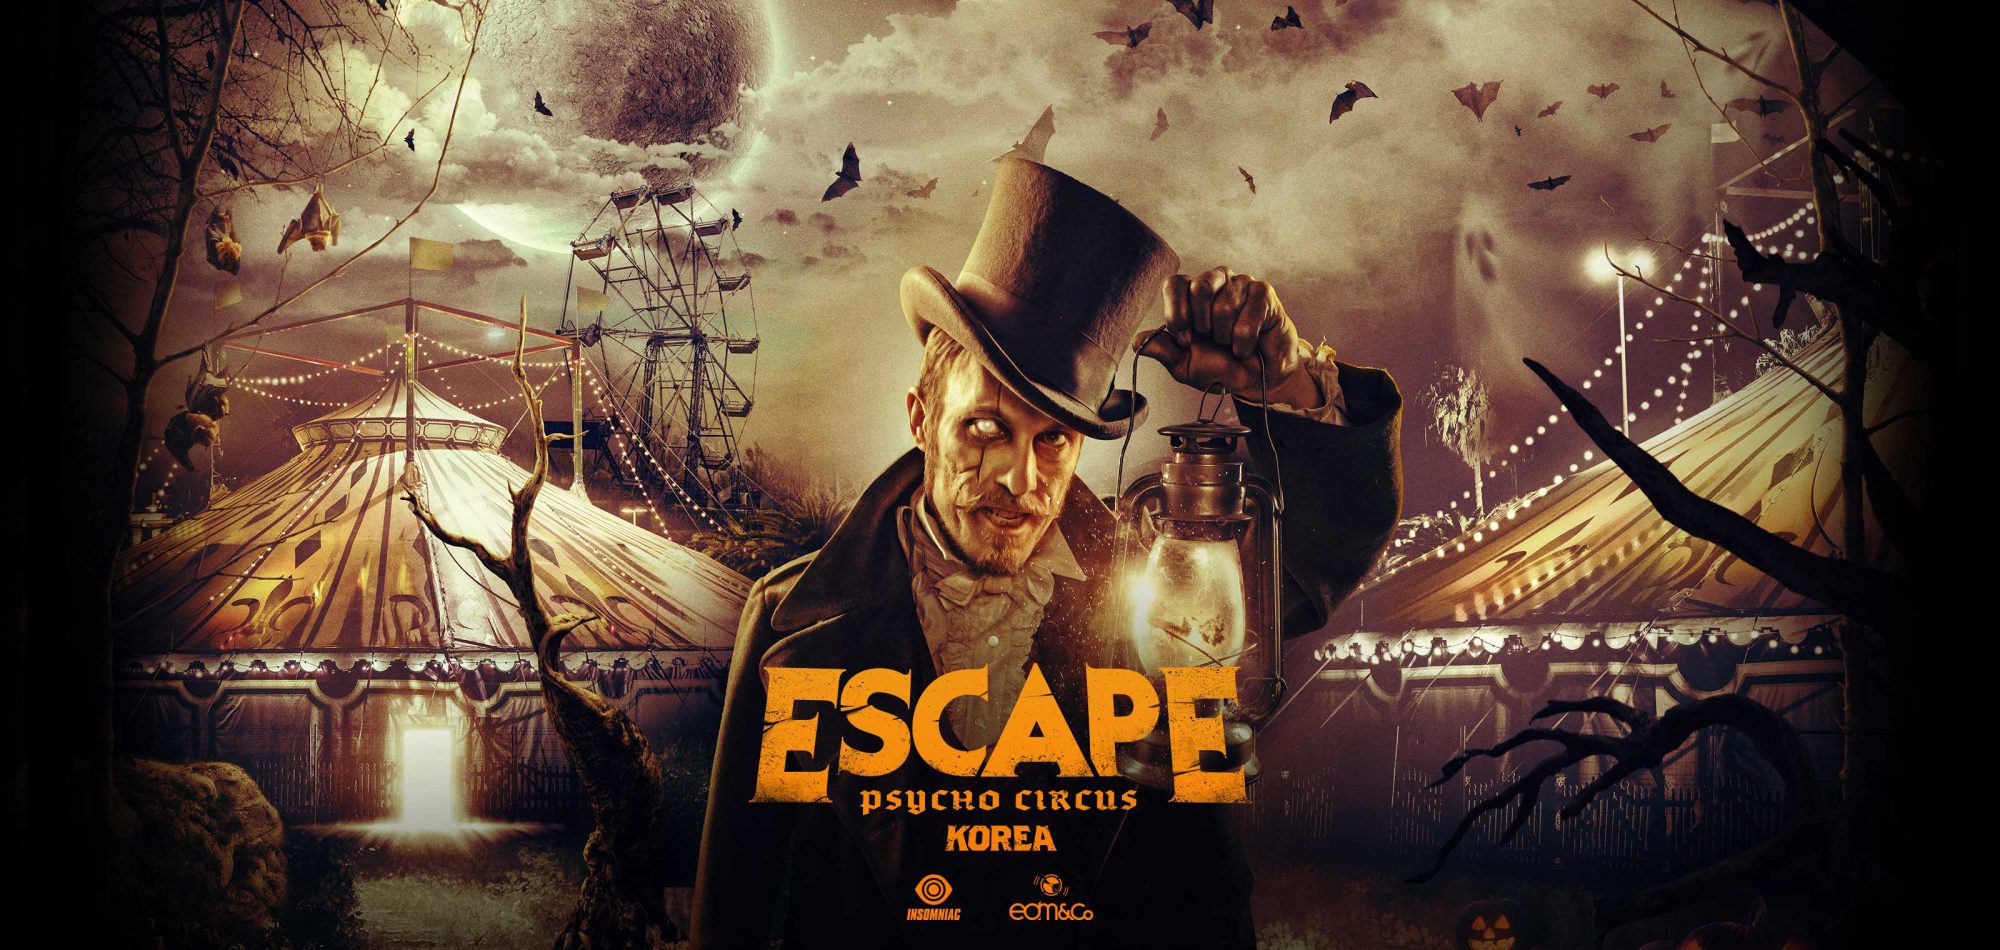 Escape Psycho Circus Korea 2019 Initial Lineup